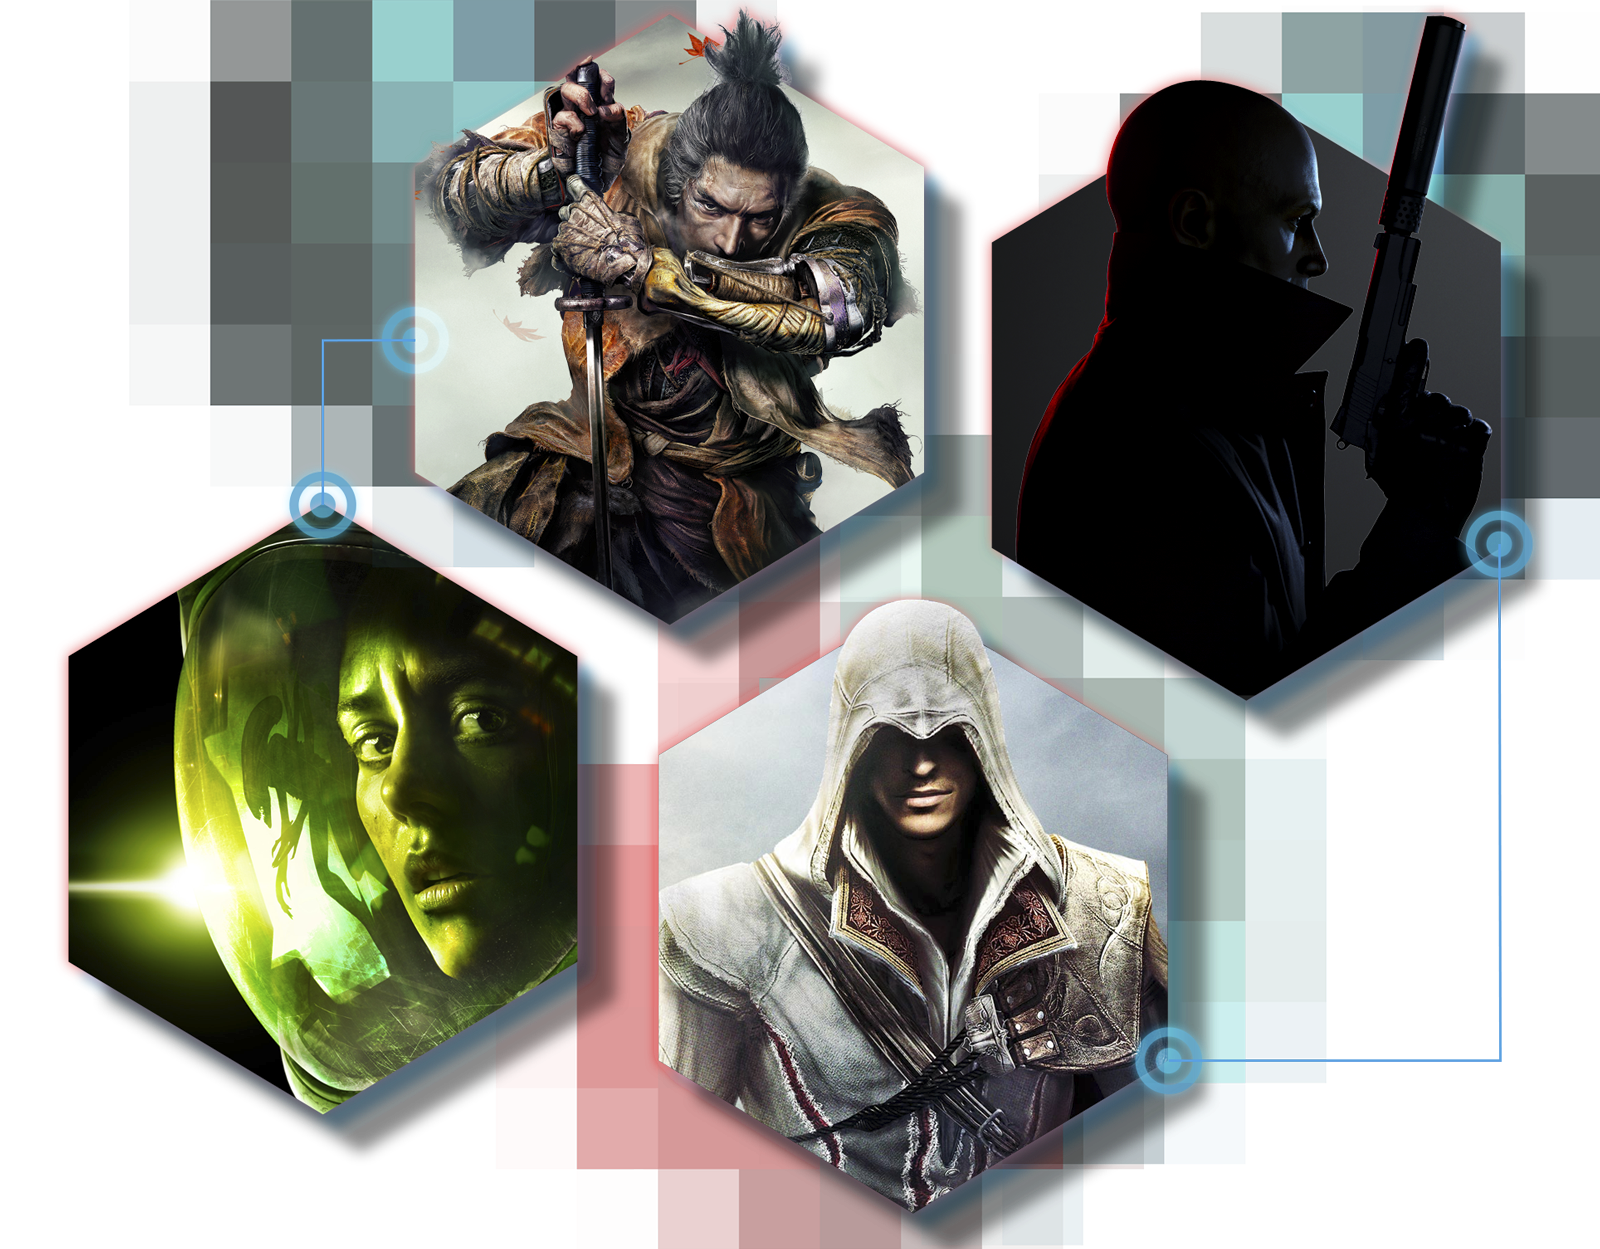 Promotivne slike igara prikradanja s ilustracijom iz igara Sekiro: Shadows Die Twice, Hitman 3, Alien: Isolation i Assassin's Creed: The Ezio Collection.